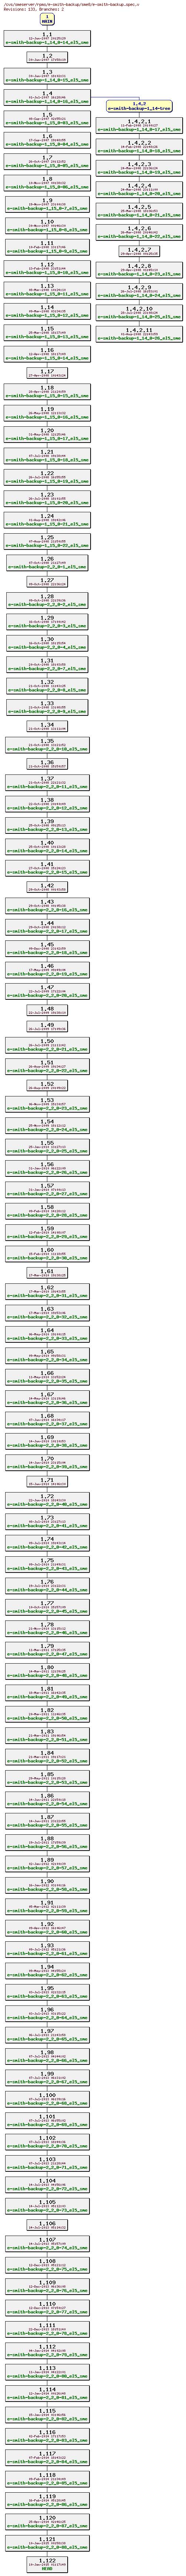 Revisions of rpms/e-smith-backup/sme8/e-smith-backup.spec